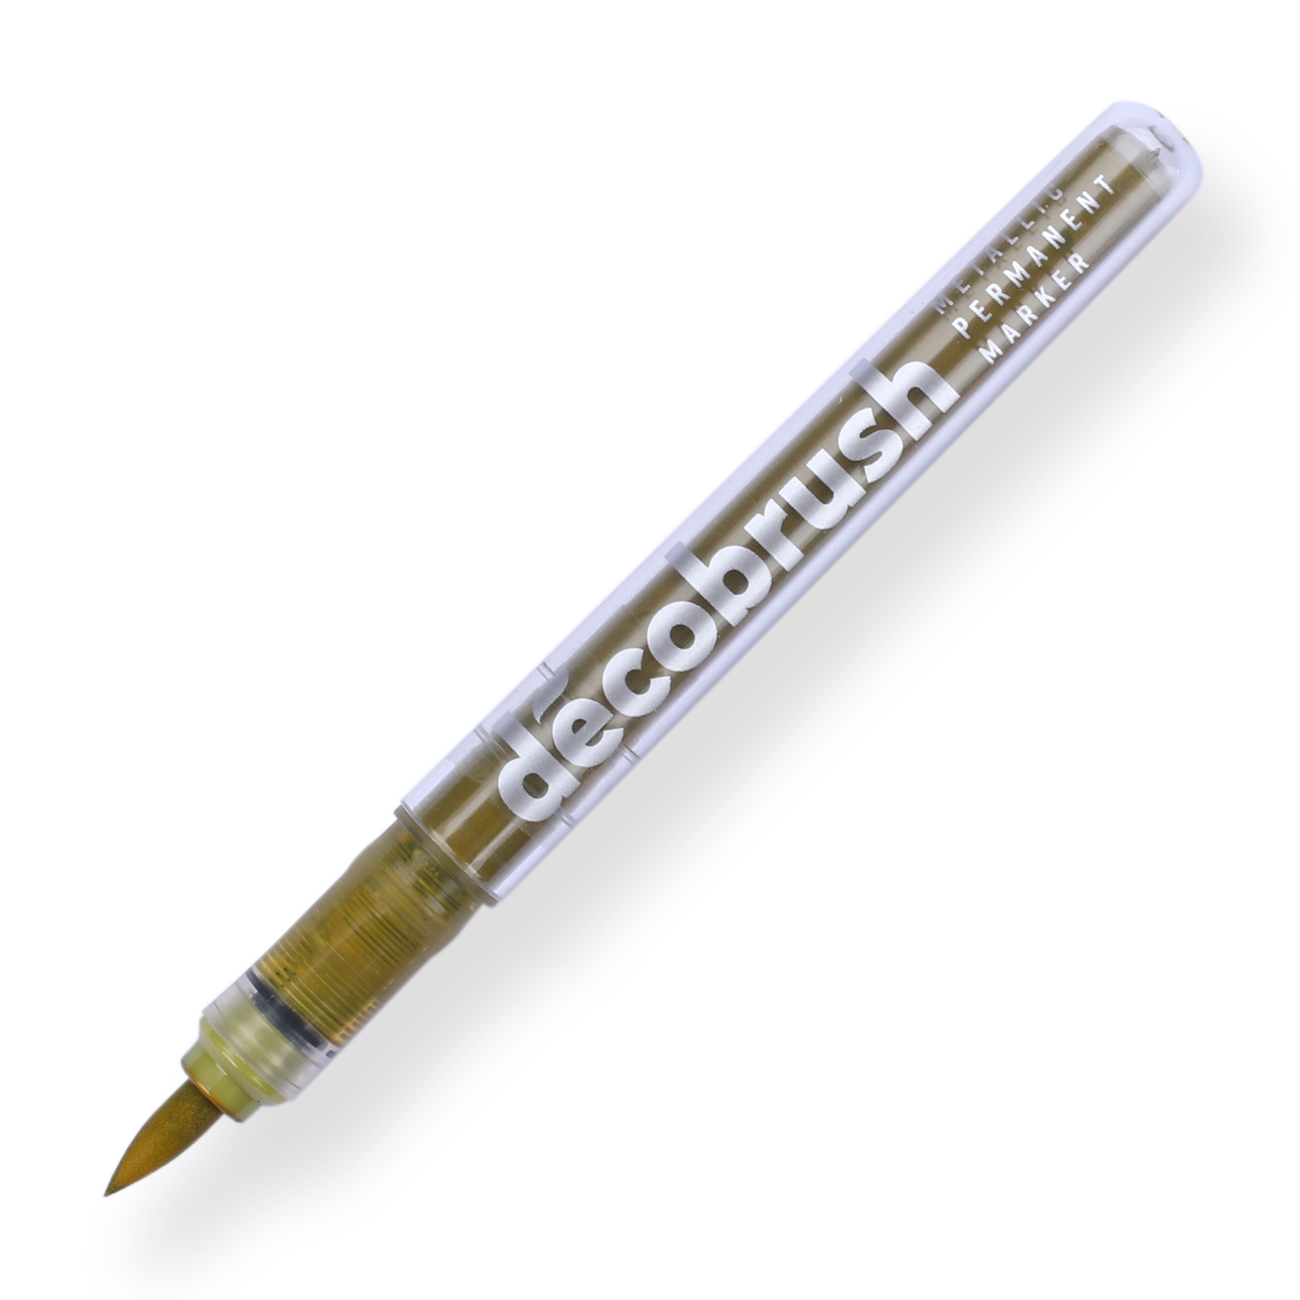 Metallic Brush Pen, Metallic Markers, Brush Pens, Brush Pen Set